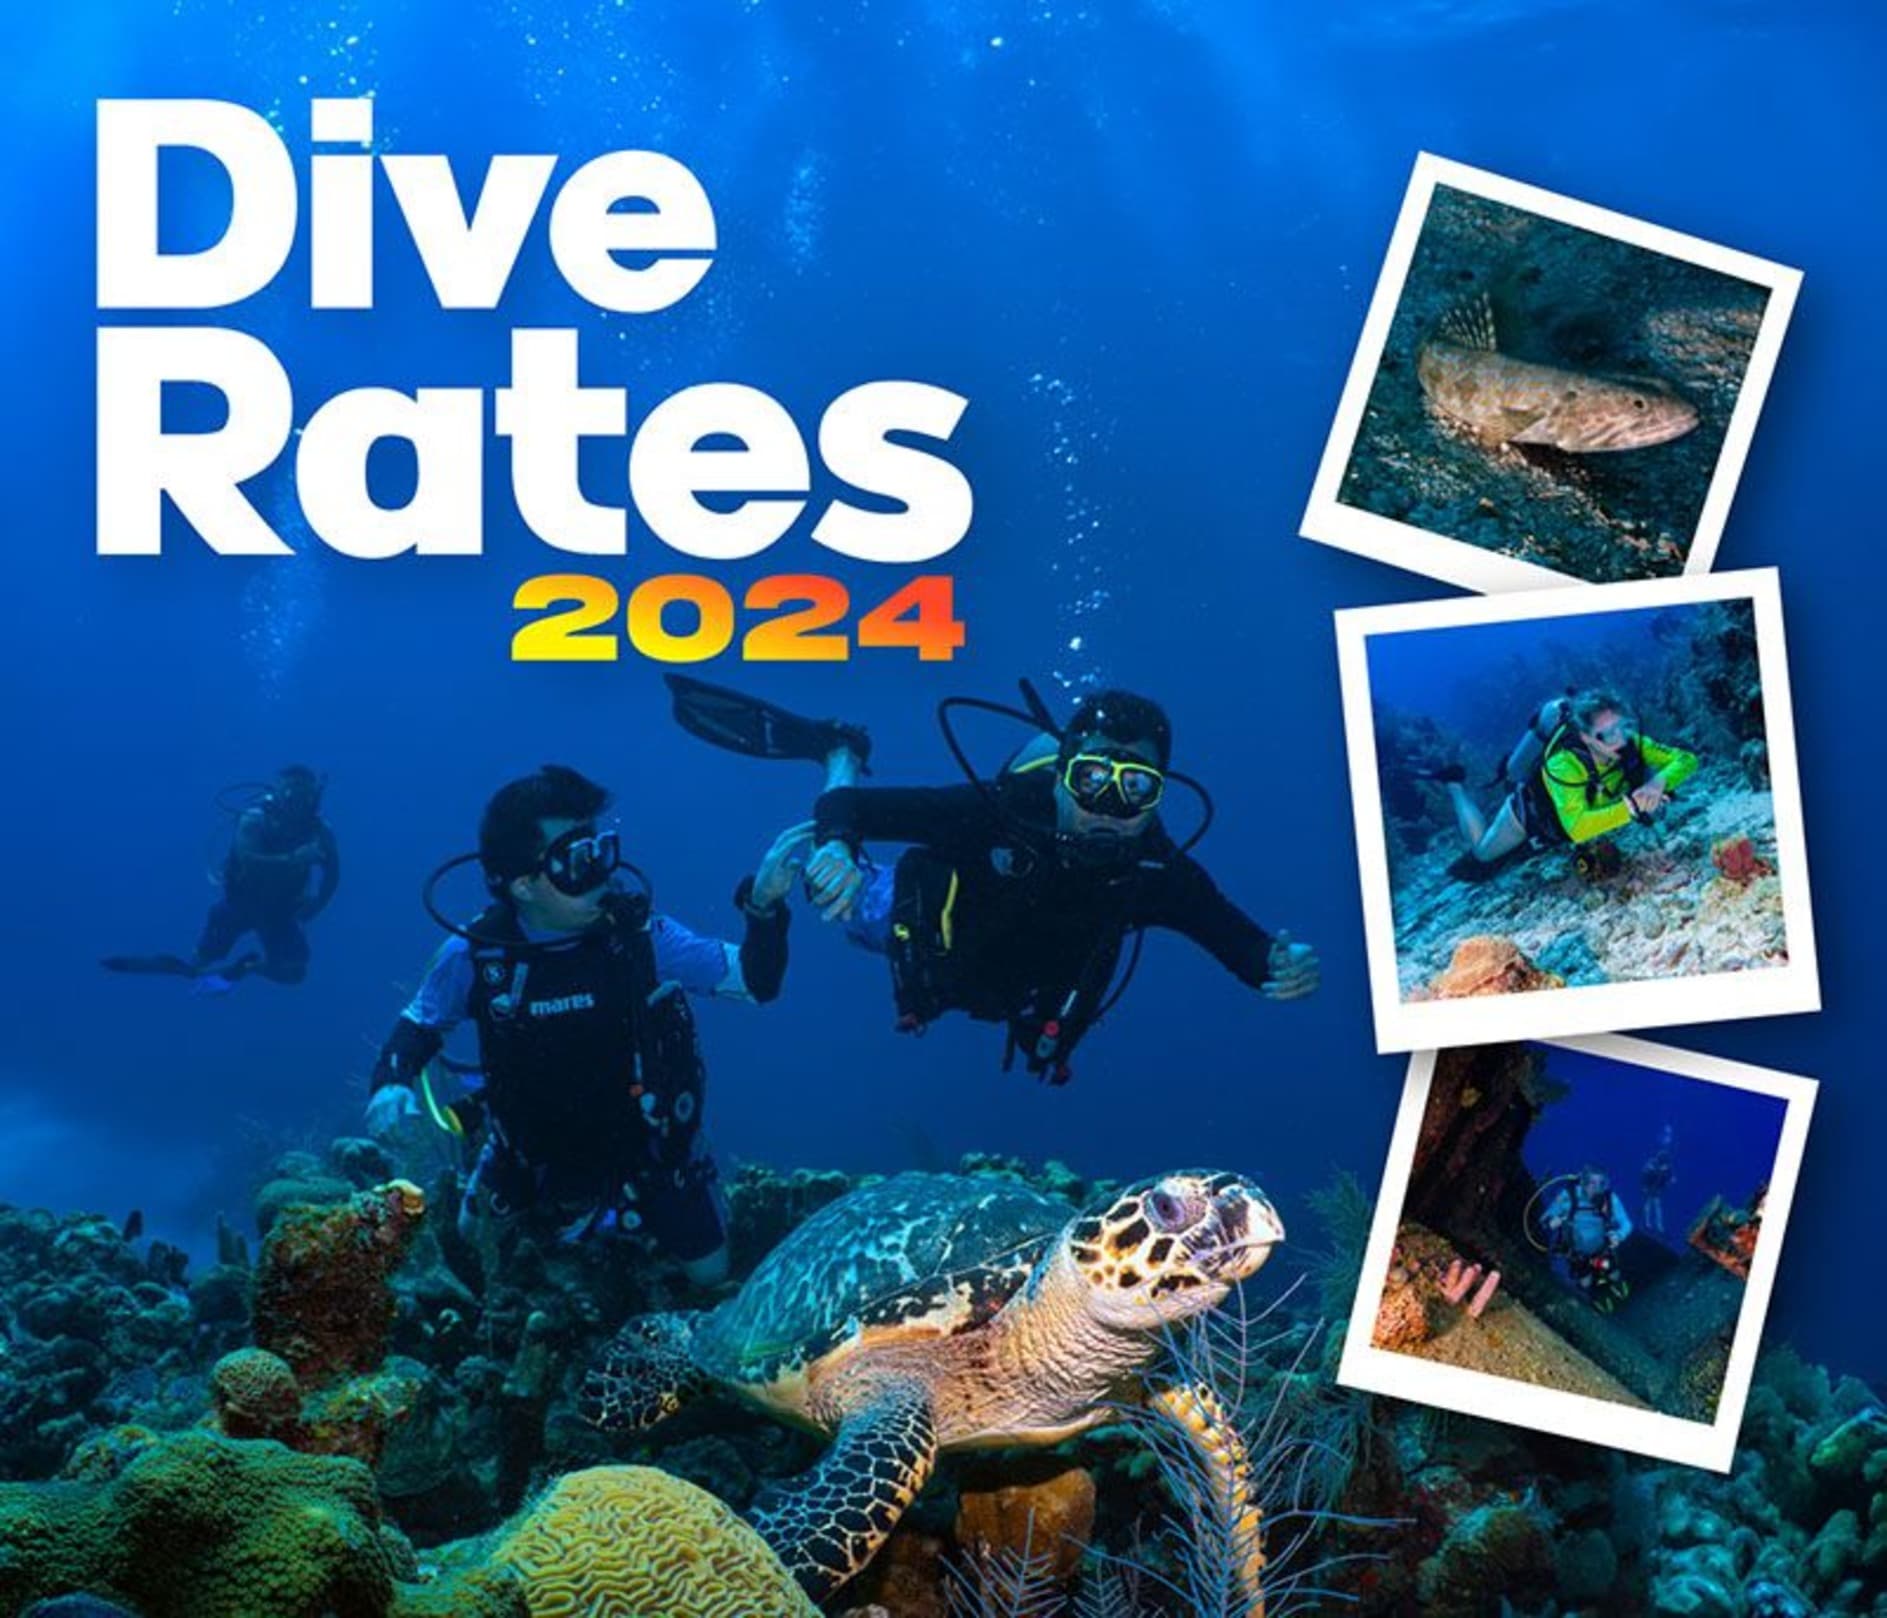   Dive Rates - 2024